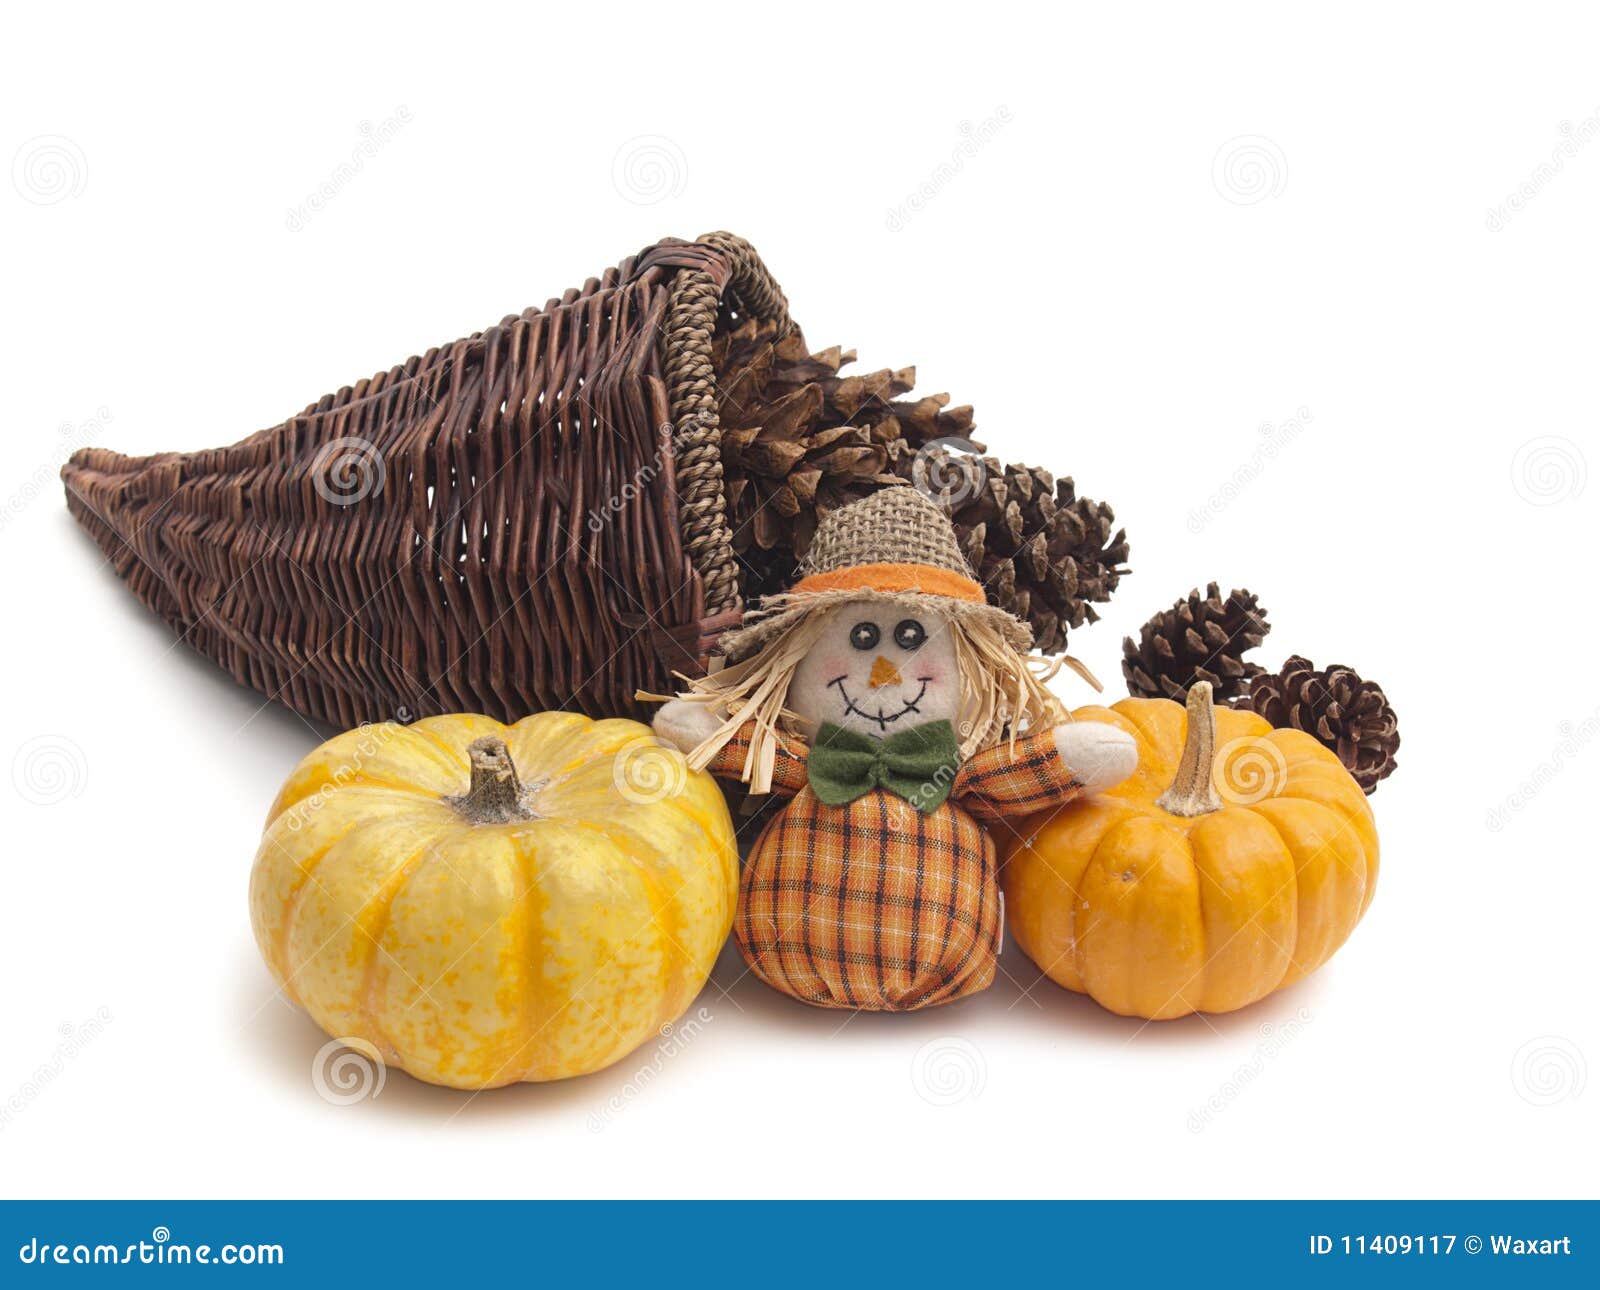 Cornucopia Basket with Pine Cones and Pumpkins Stock Image - Image of ...